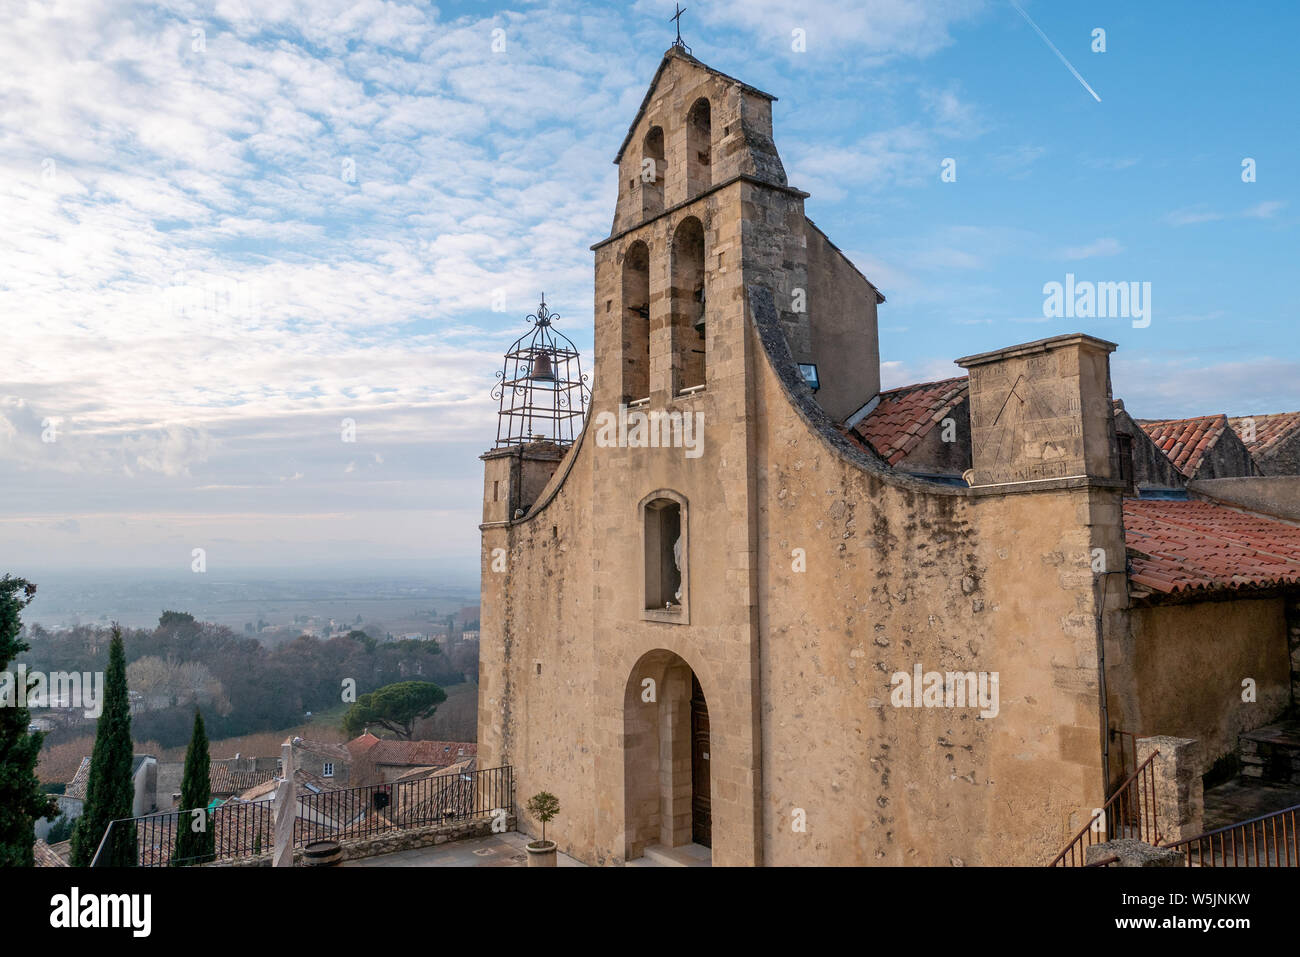 Gigondas, France - January 17, 2019: typical buildings, streets and church of Gigondas, French Rhone wine region. Stock Photo